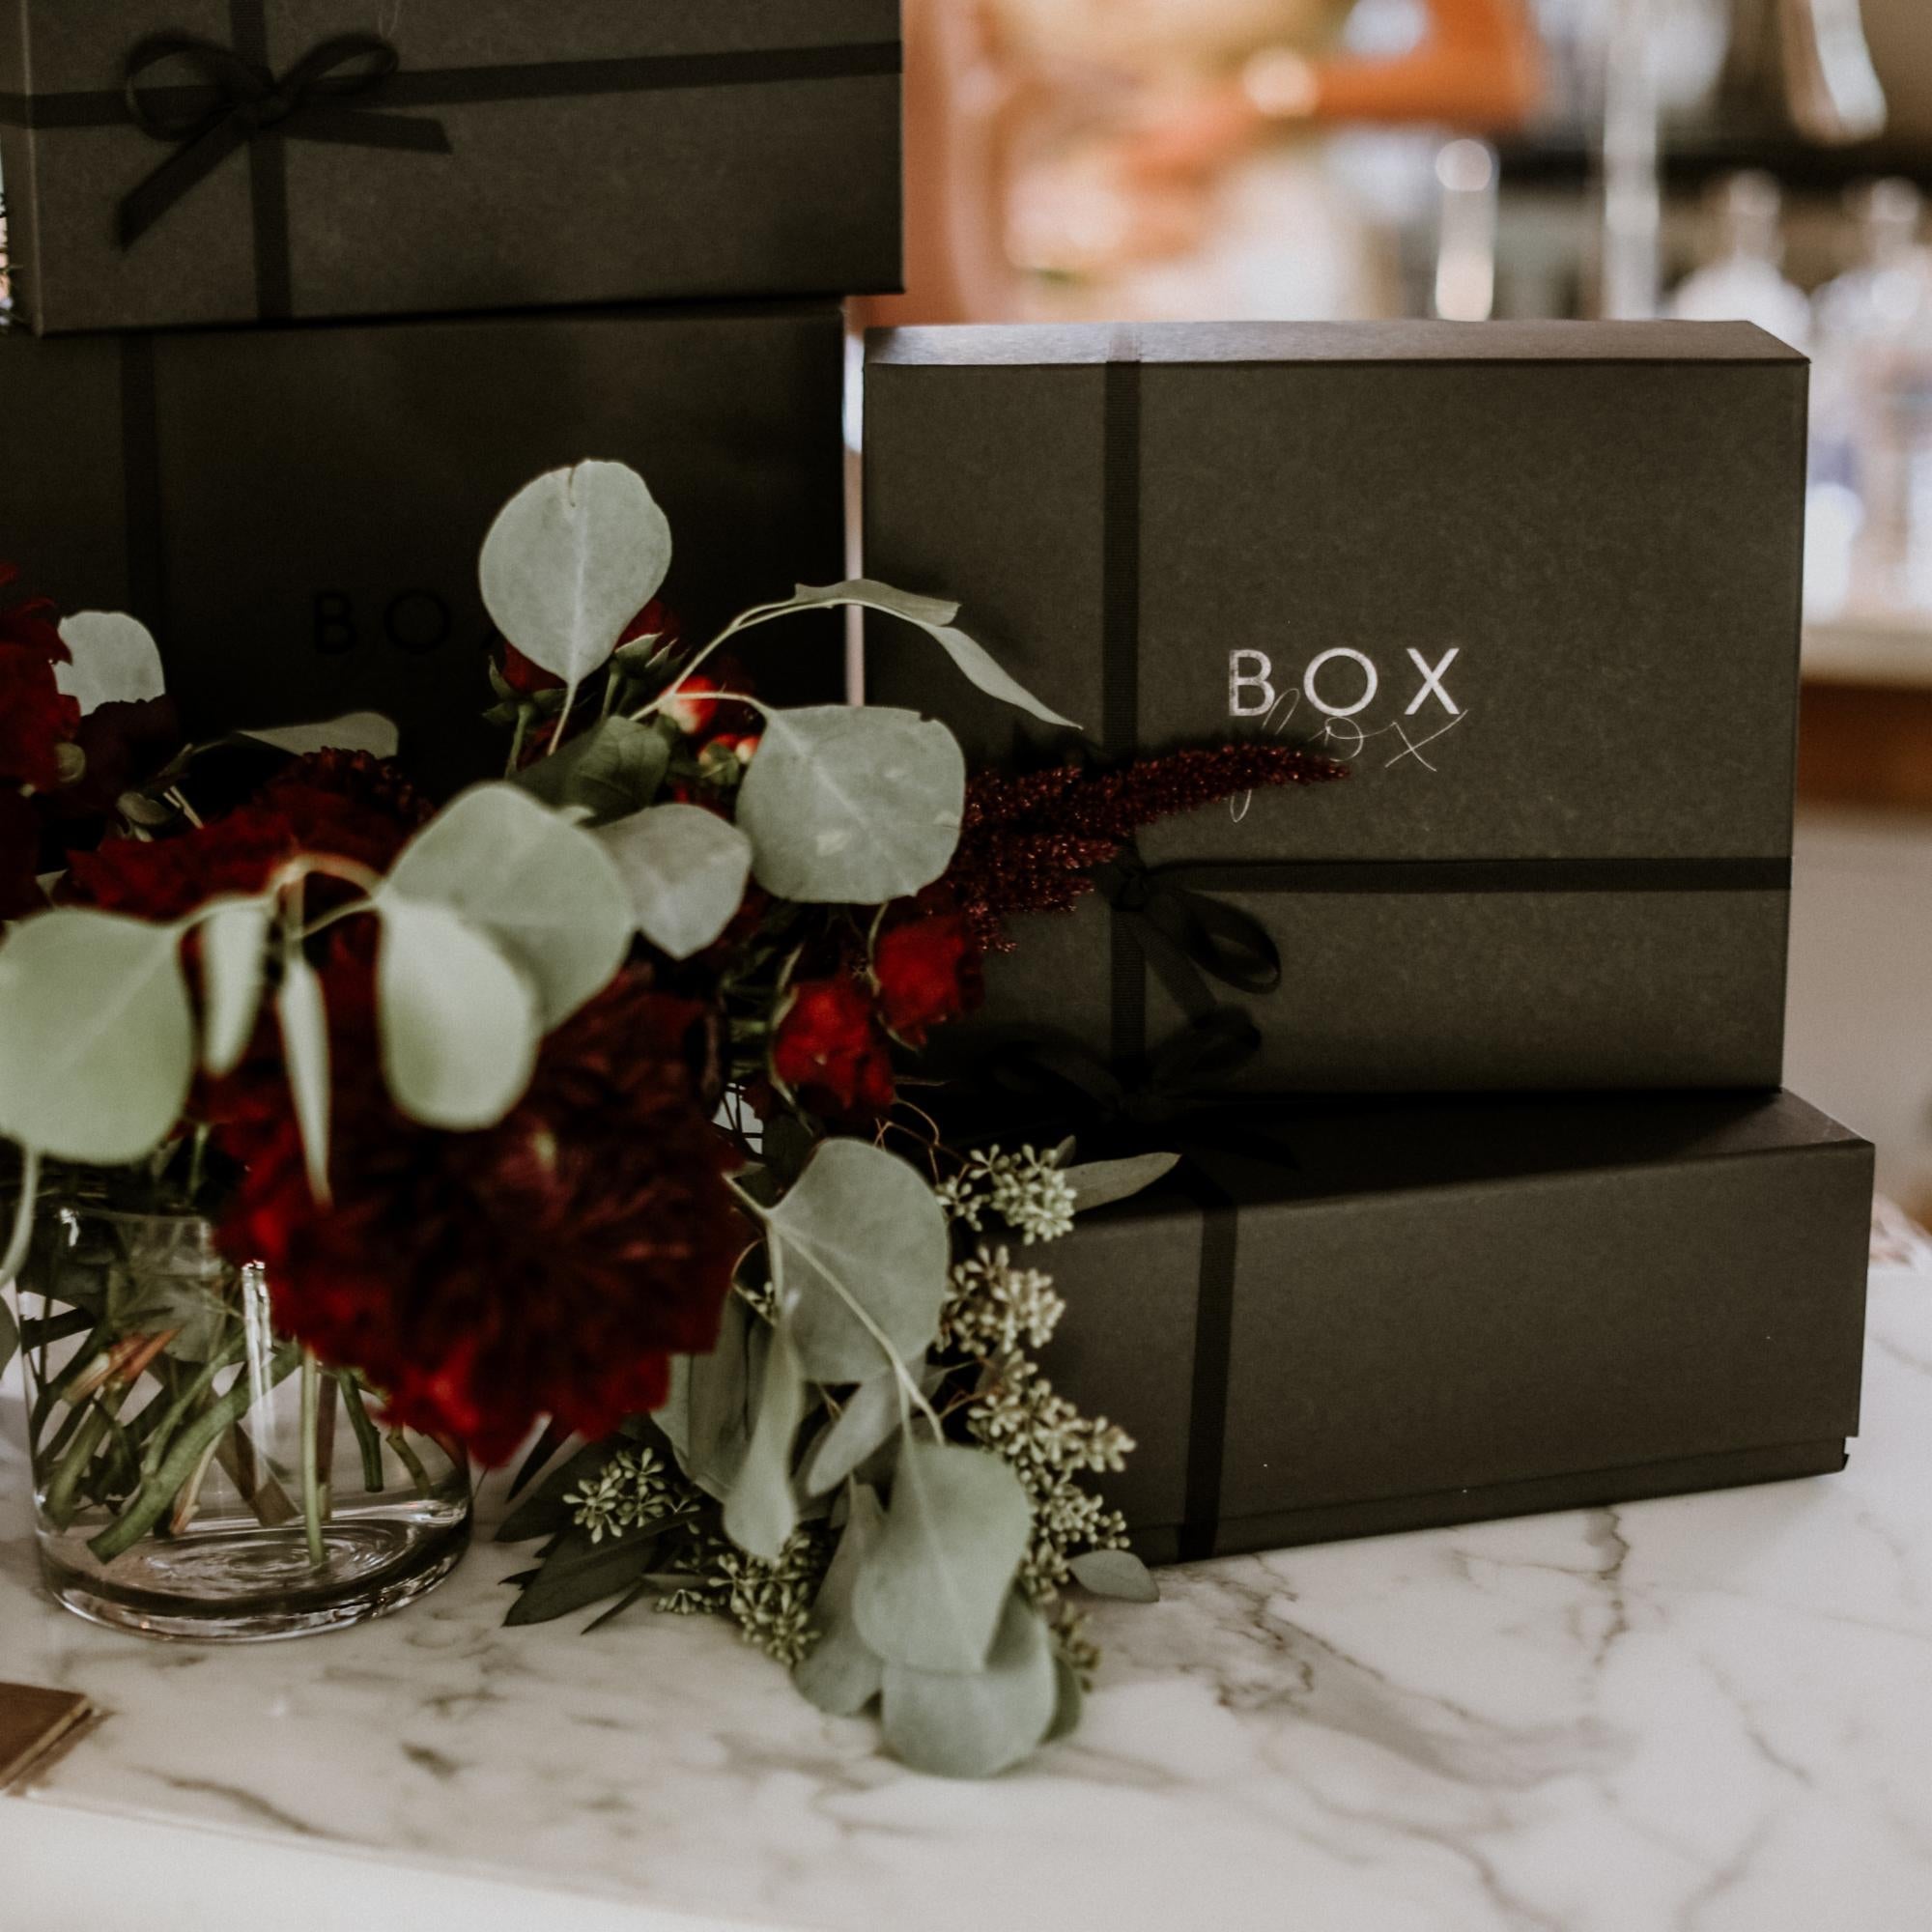 Event Recap: BOXFOX Corporate Holiday Preview 2019